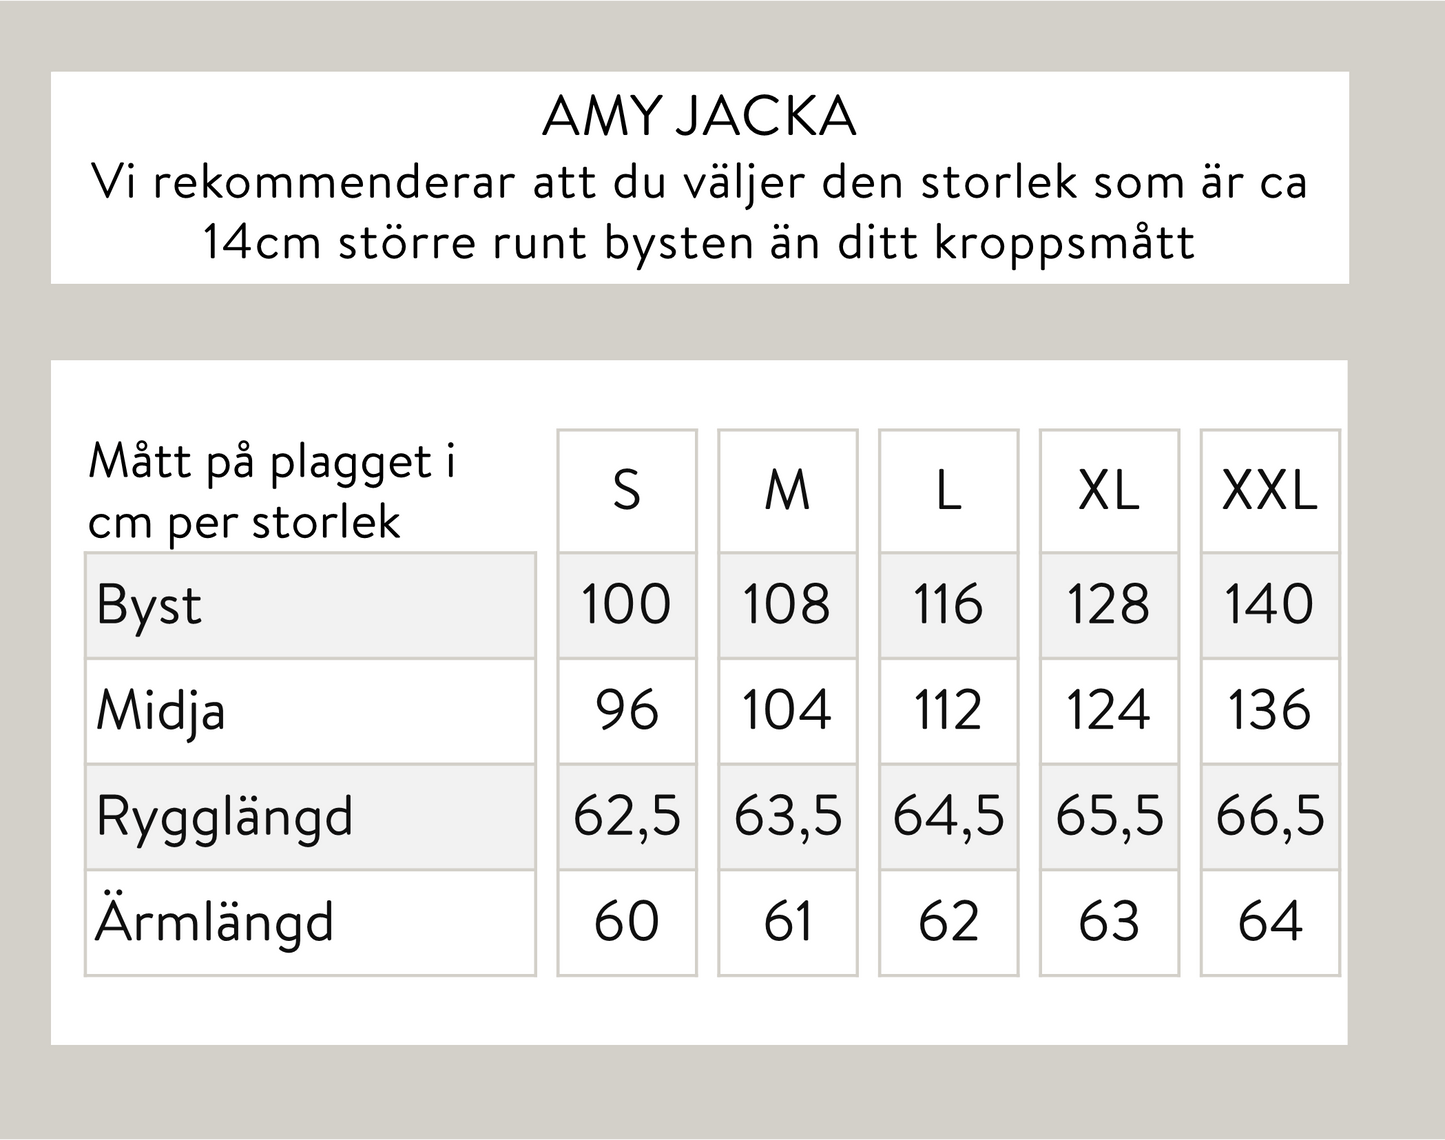 Amy jacka - Grön